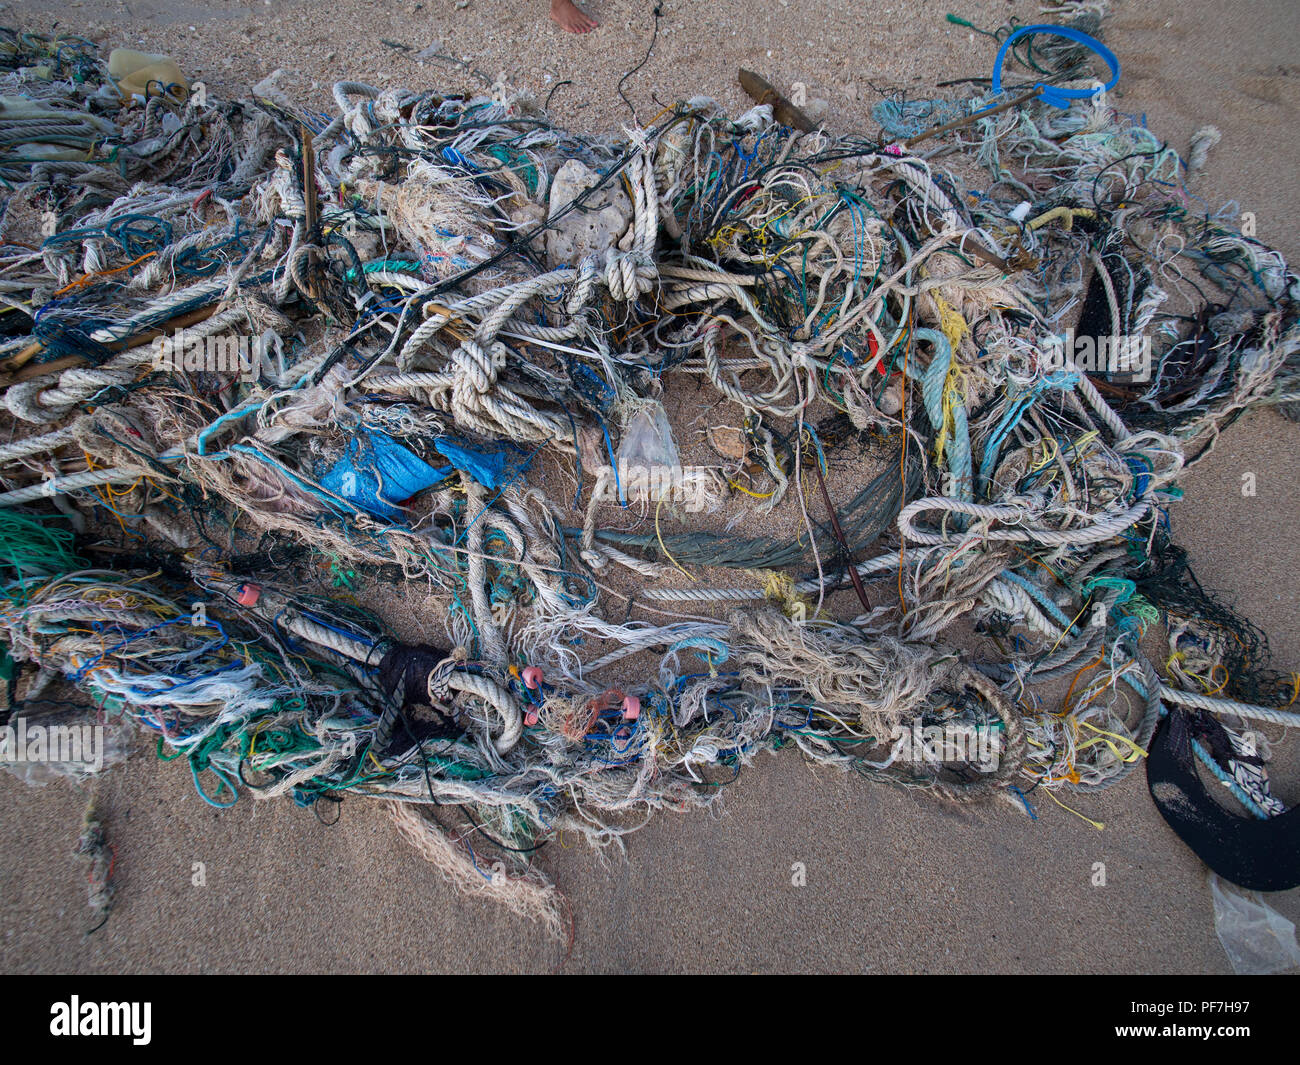 Marine debris washed up on the beach Stock Photo